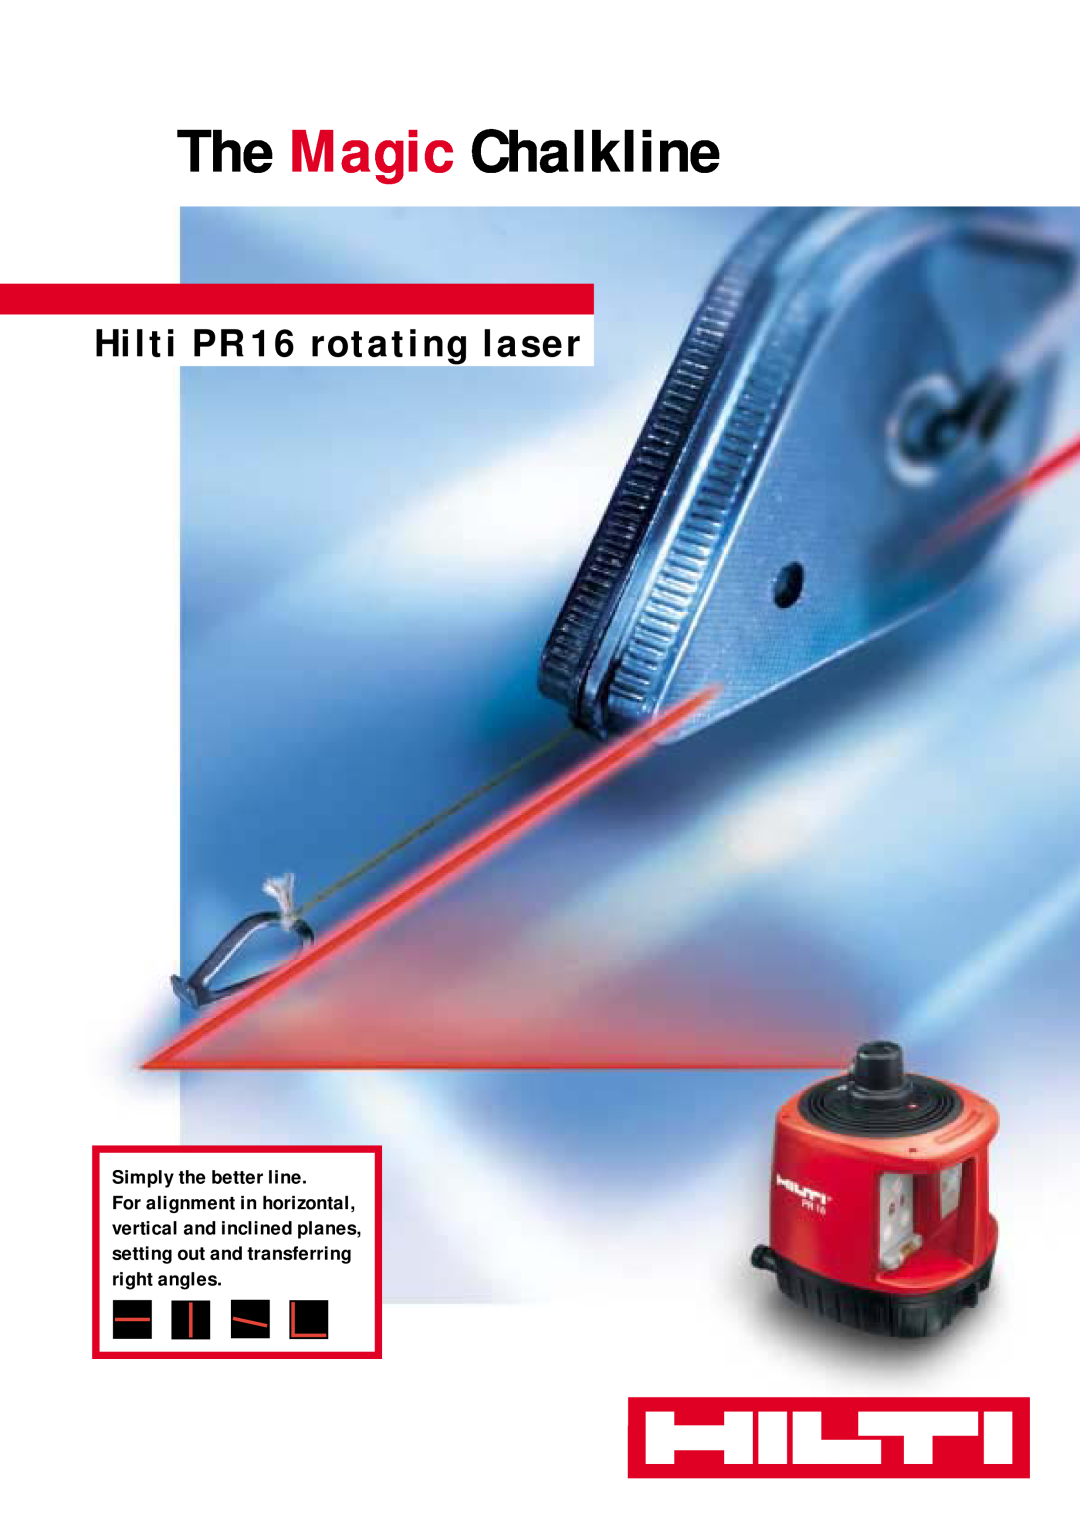 Hilti manual Simply the better line, The Magic Chalkline, Hilti PR 16 rotating laser 